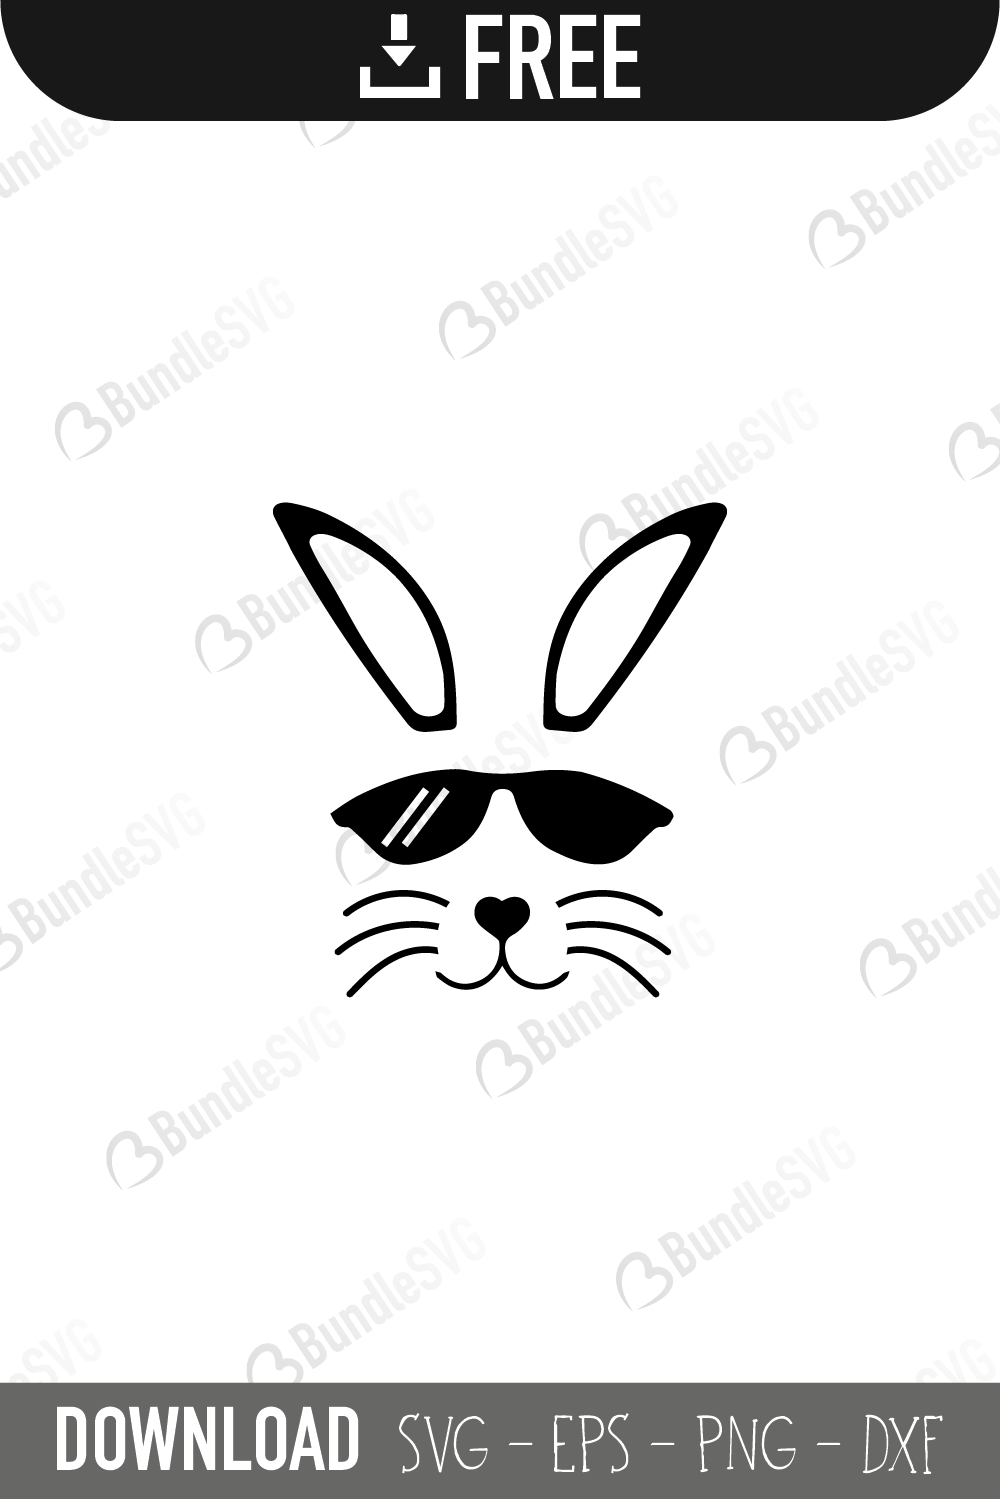 Download Bunny With Sunglasses Svg Cut Files Bundlesvg